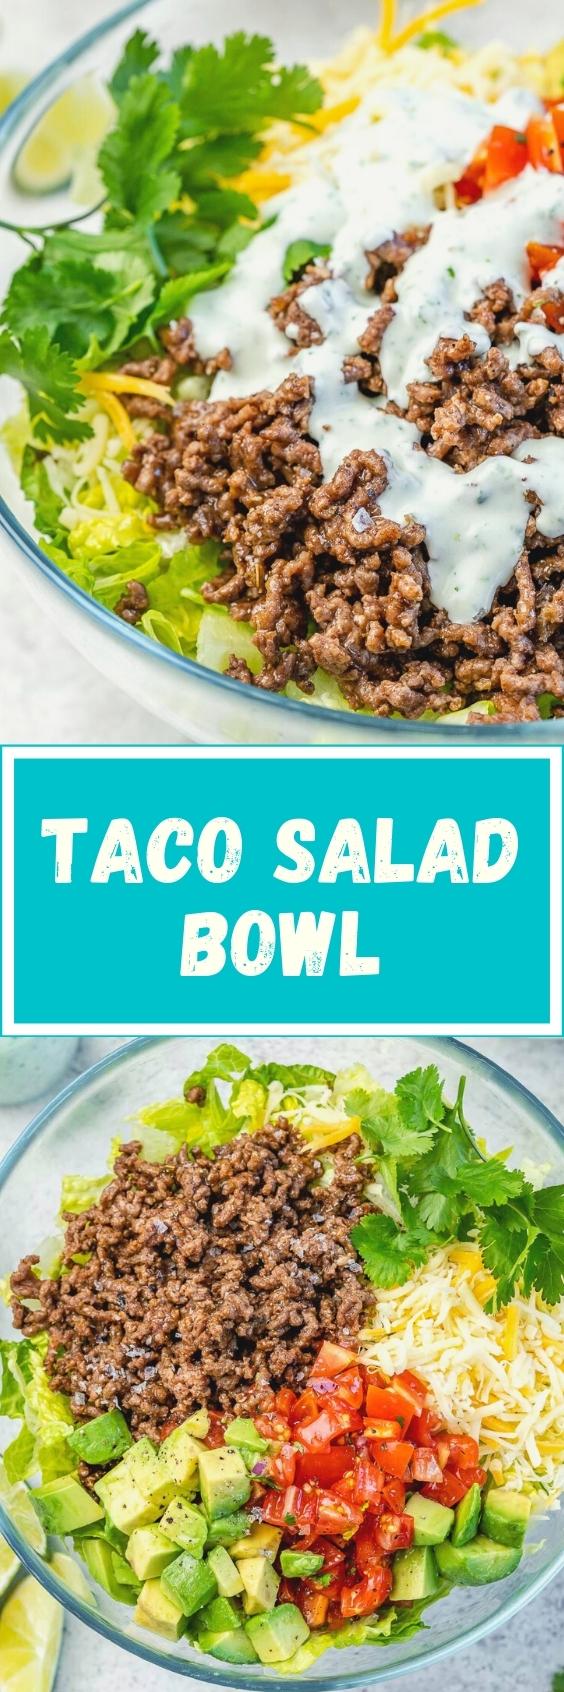 Jokari Perfect Salad Draining Bowl